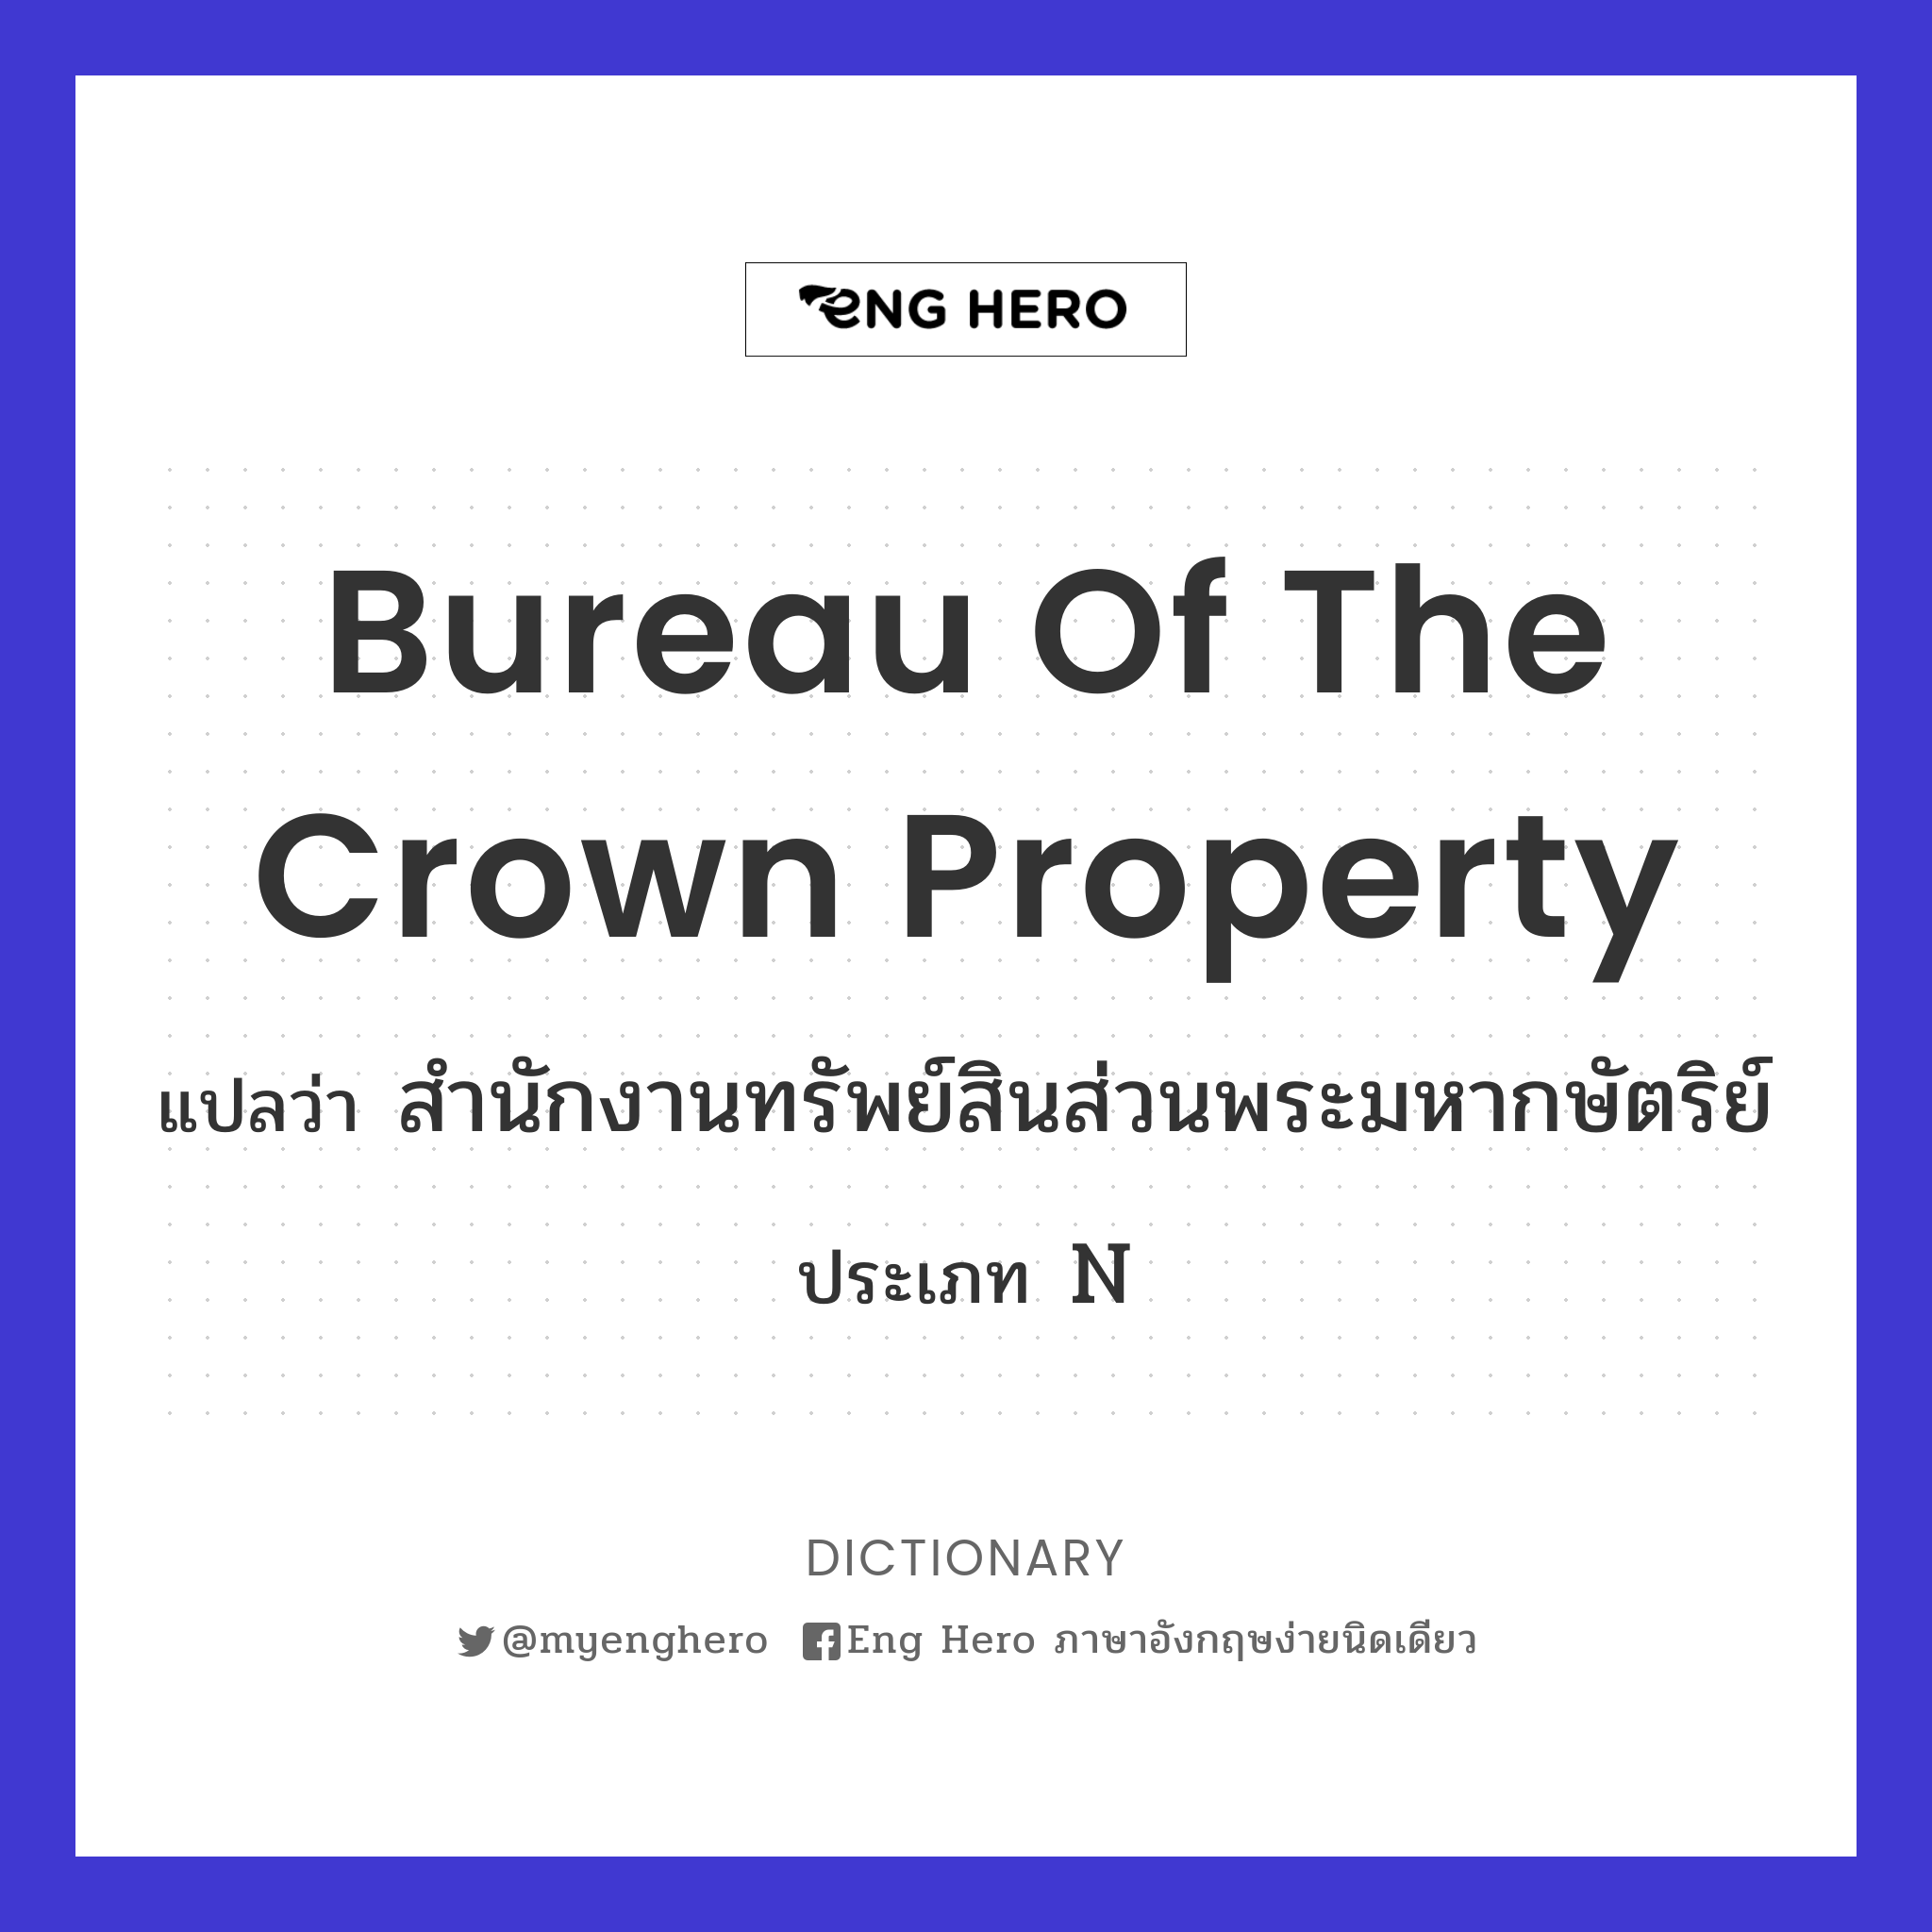 Bureau of the Crown Property